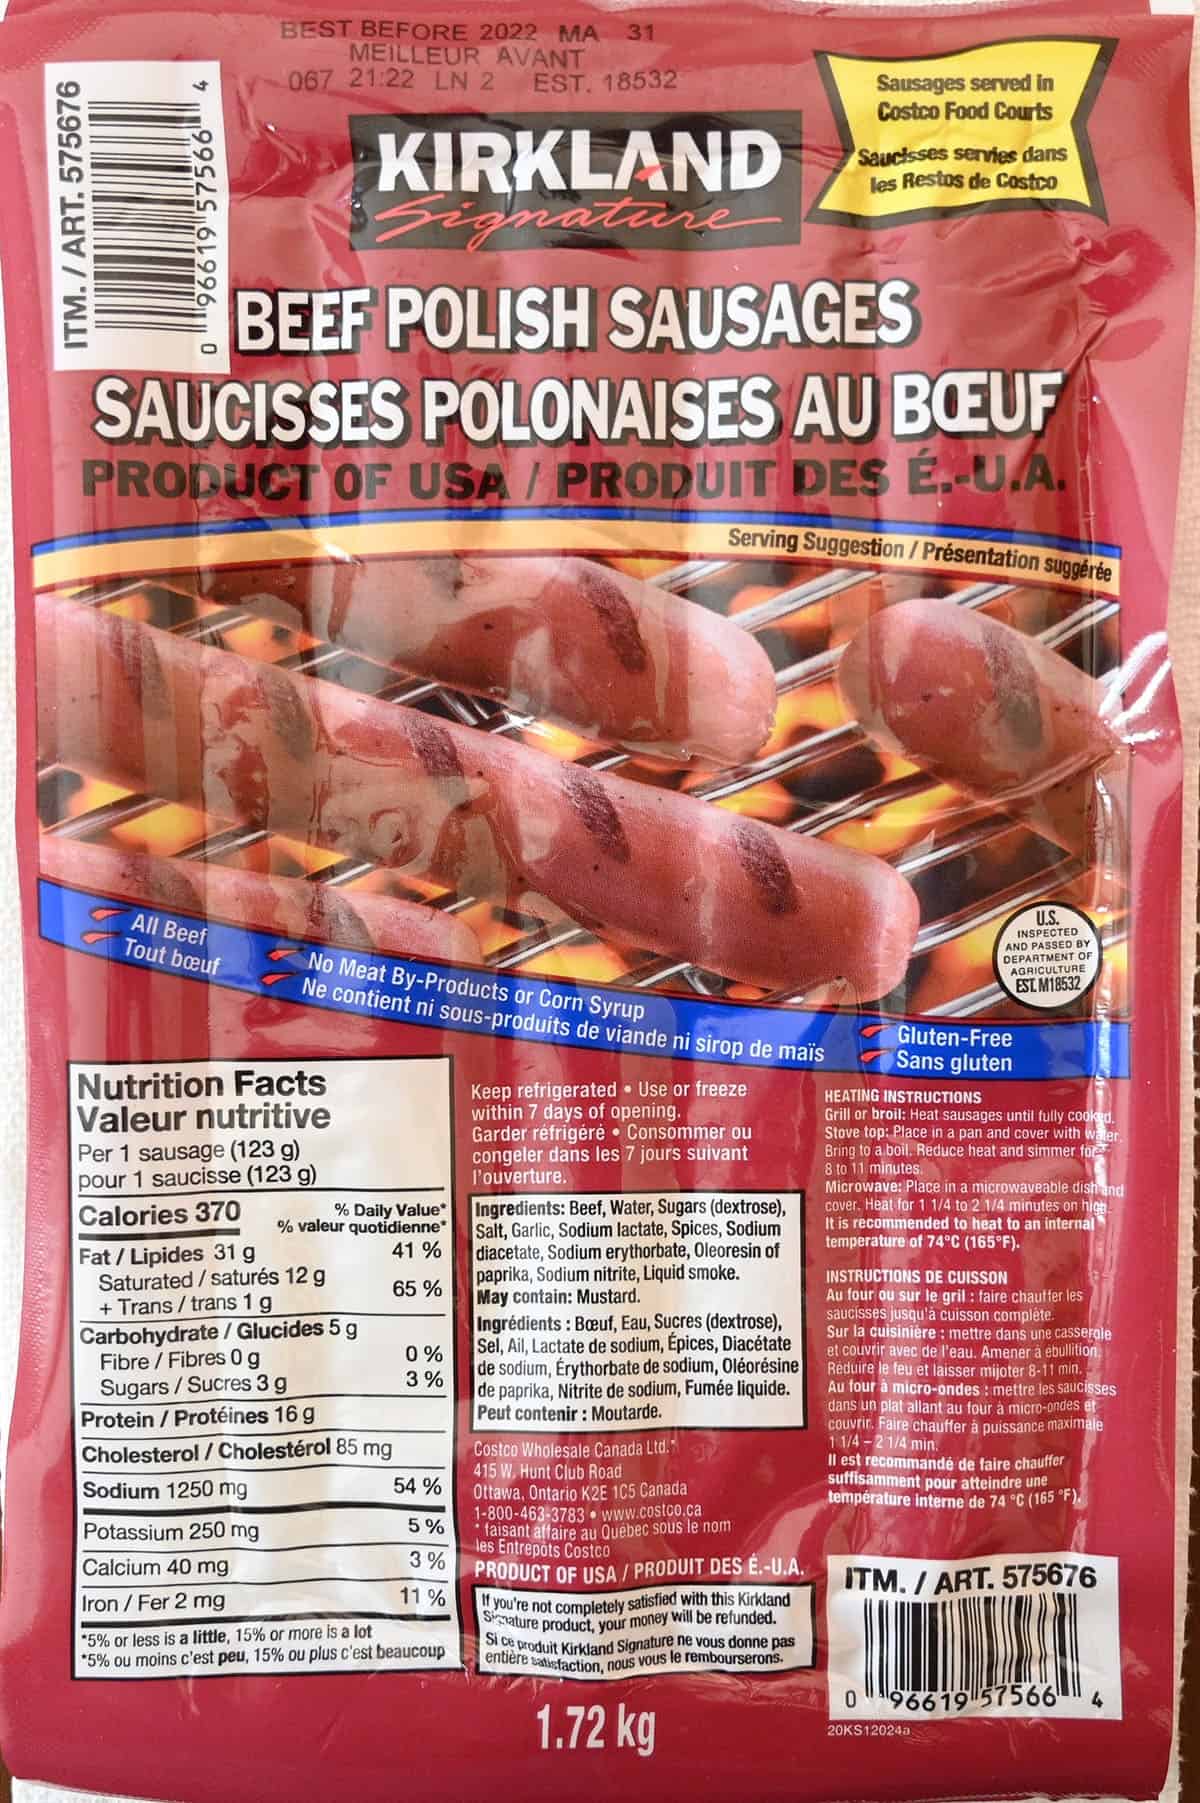 Costco Kirkland Signature Beef Polish Sausages package, close up image. 